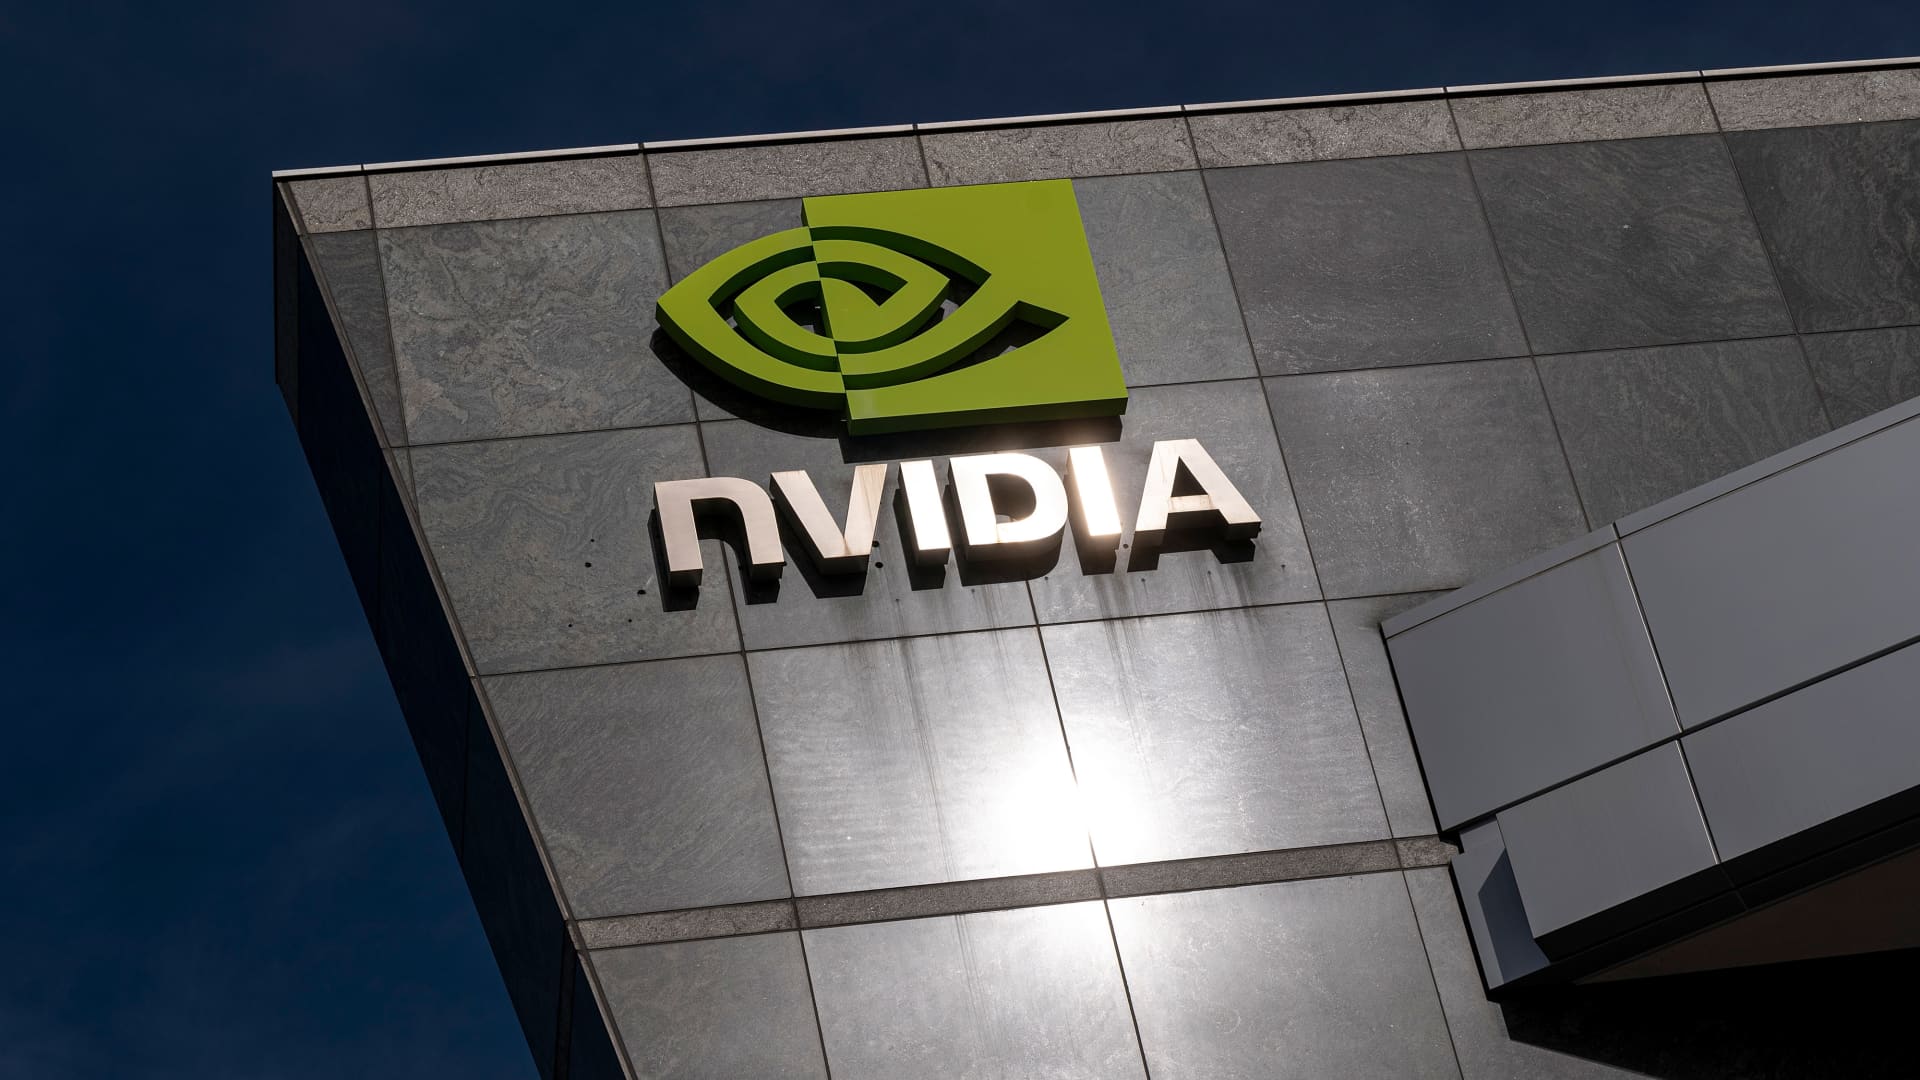 Nvidia headquarters in Santa Clara, California, on Tuesday, Feb. 23, 2021.